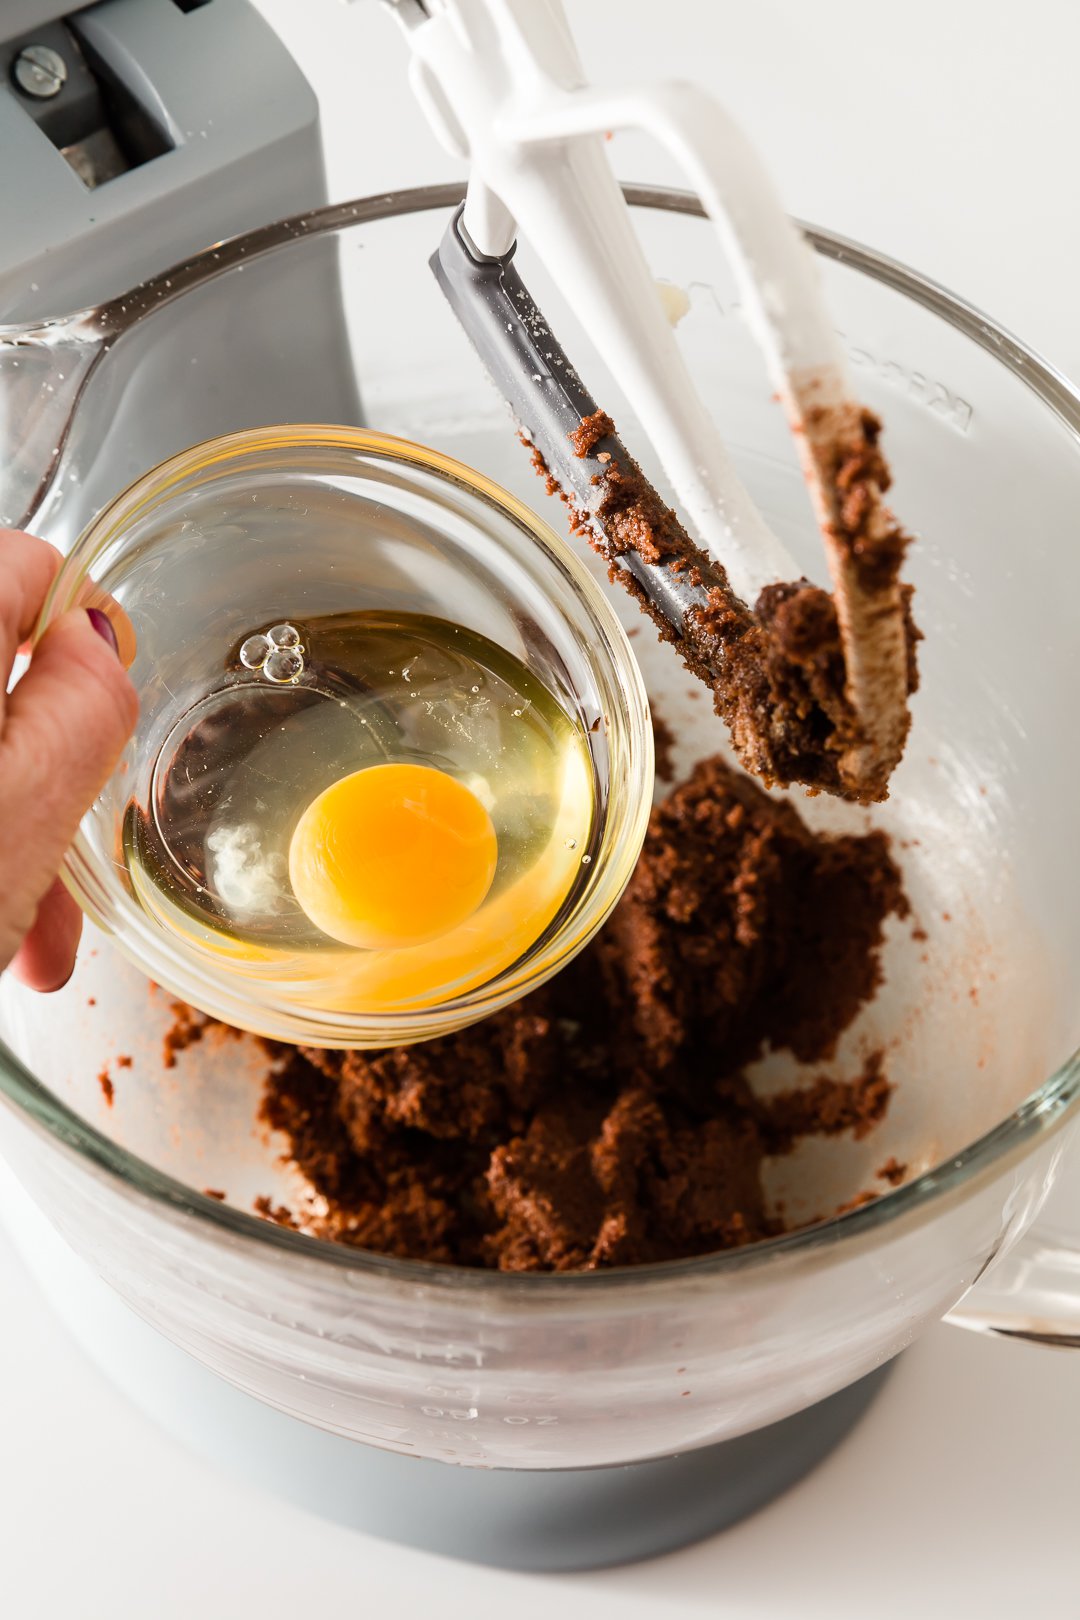 Adding eggs to chocolate cupcake batter